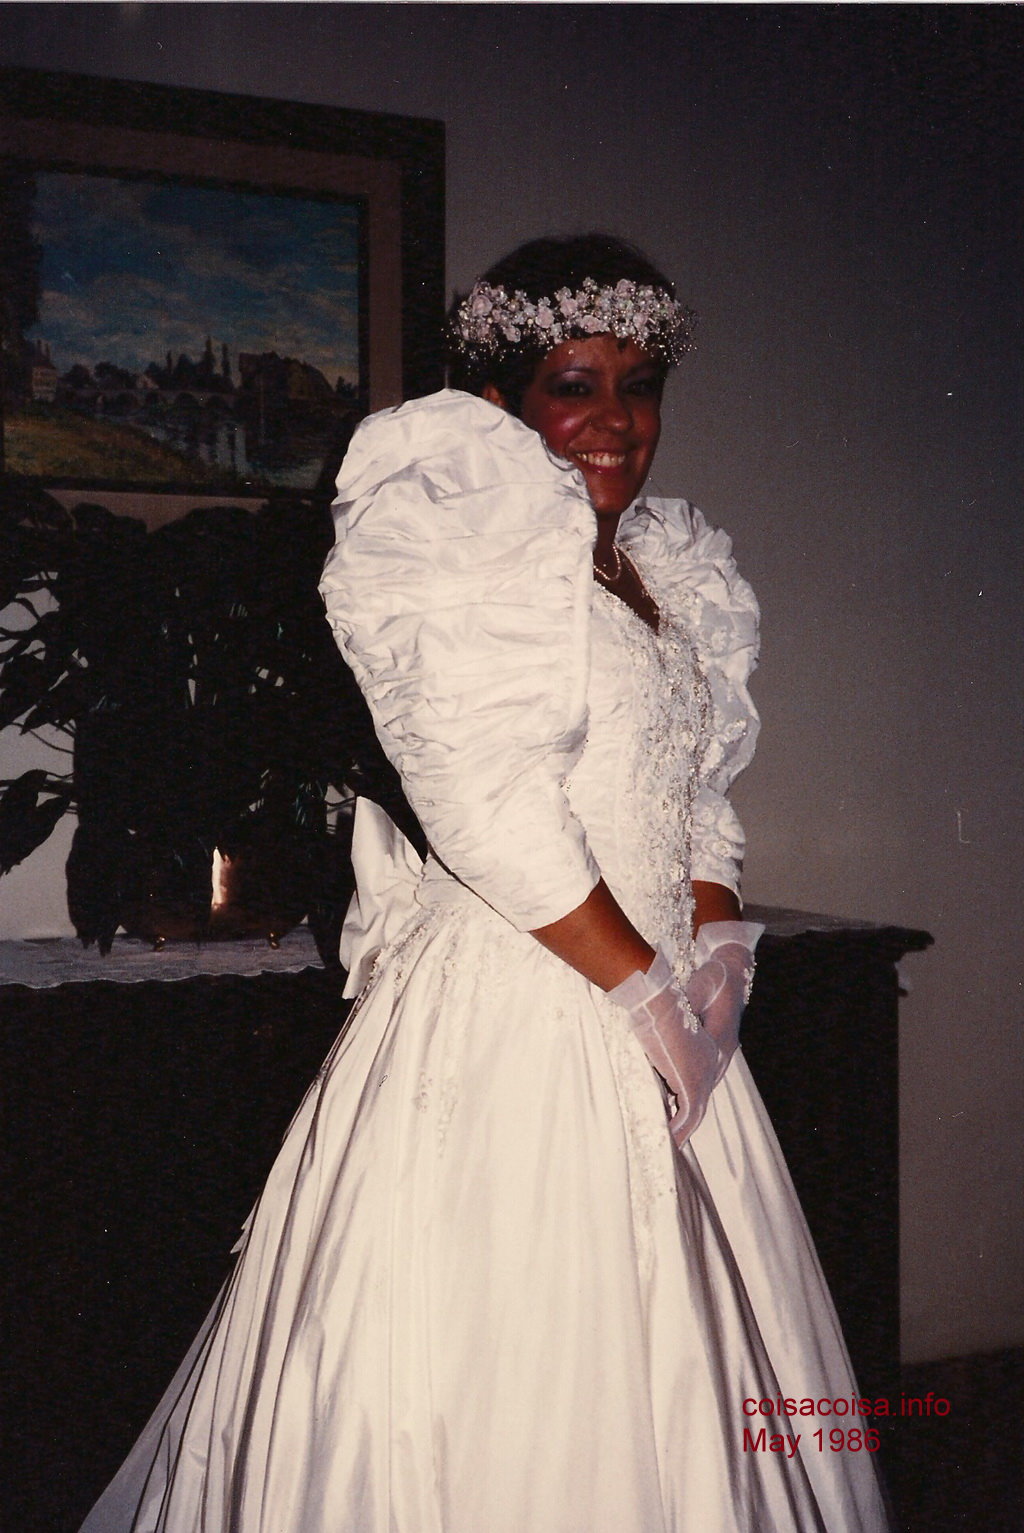 Heloisa in her wedding dress